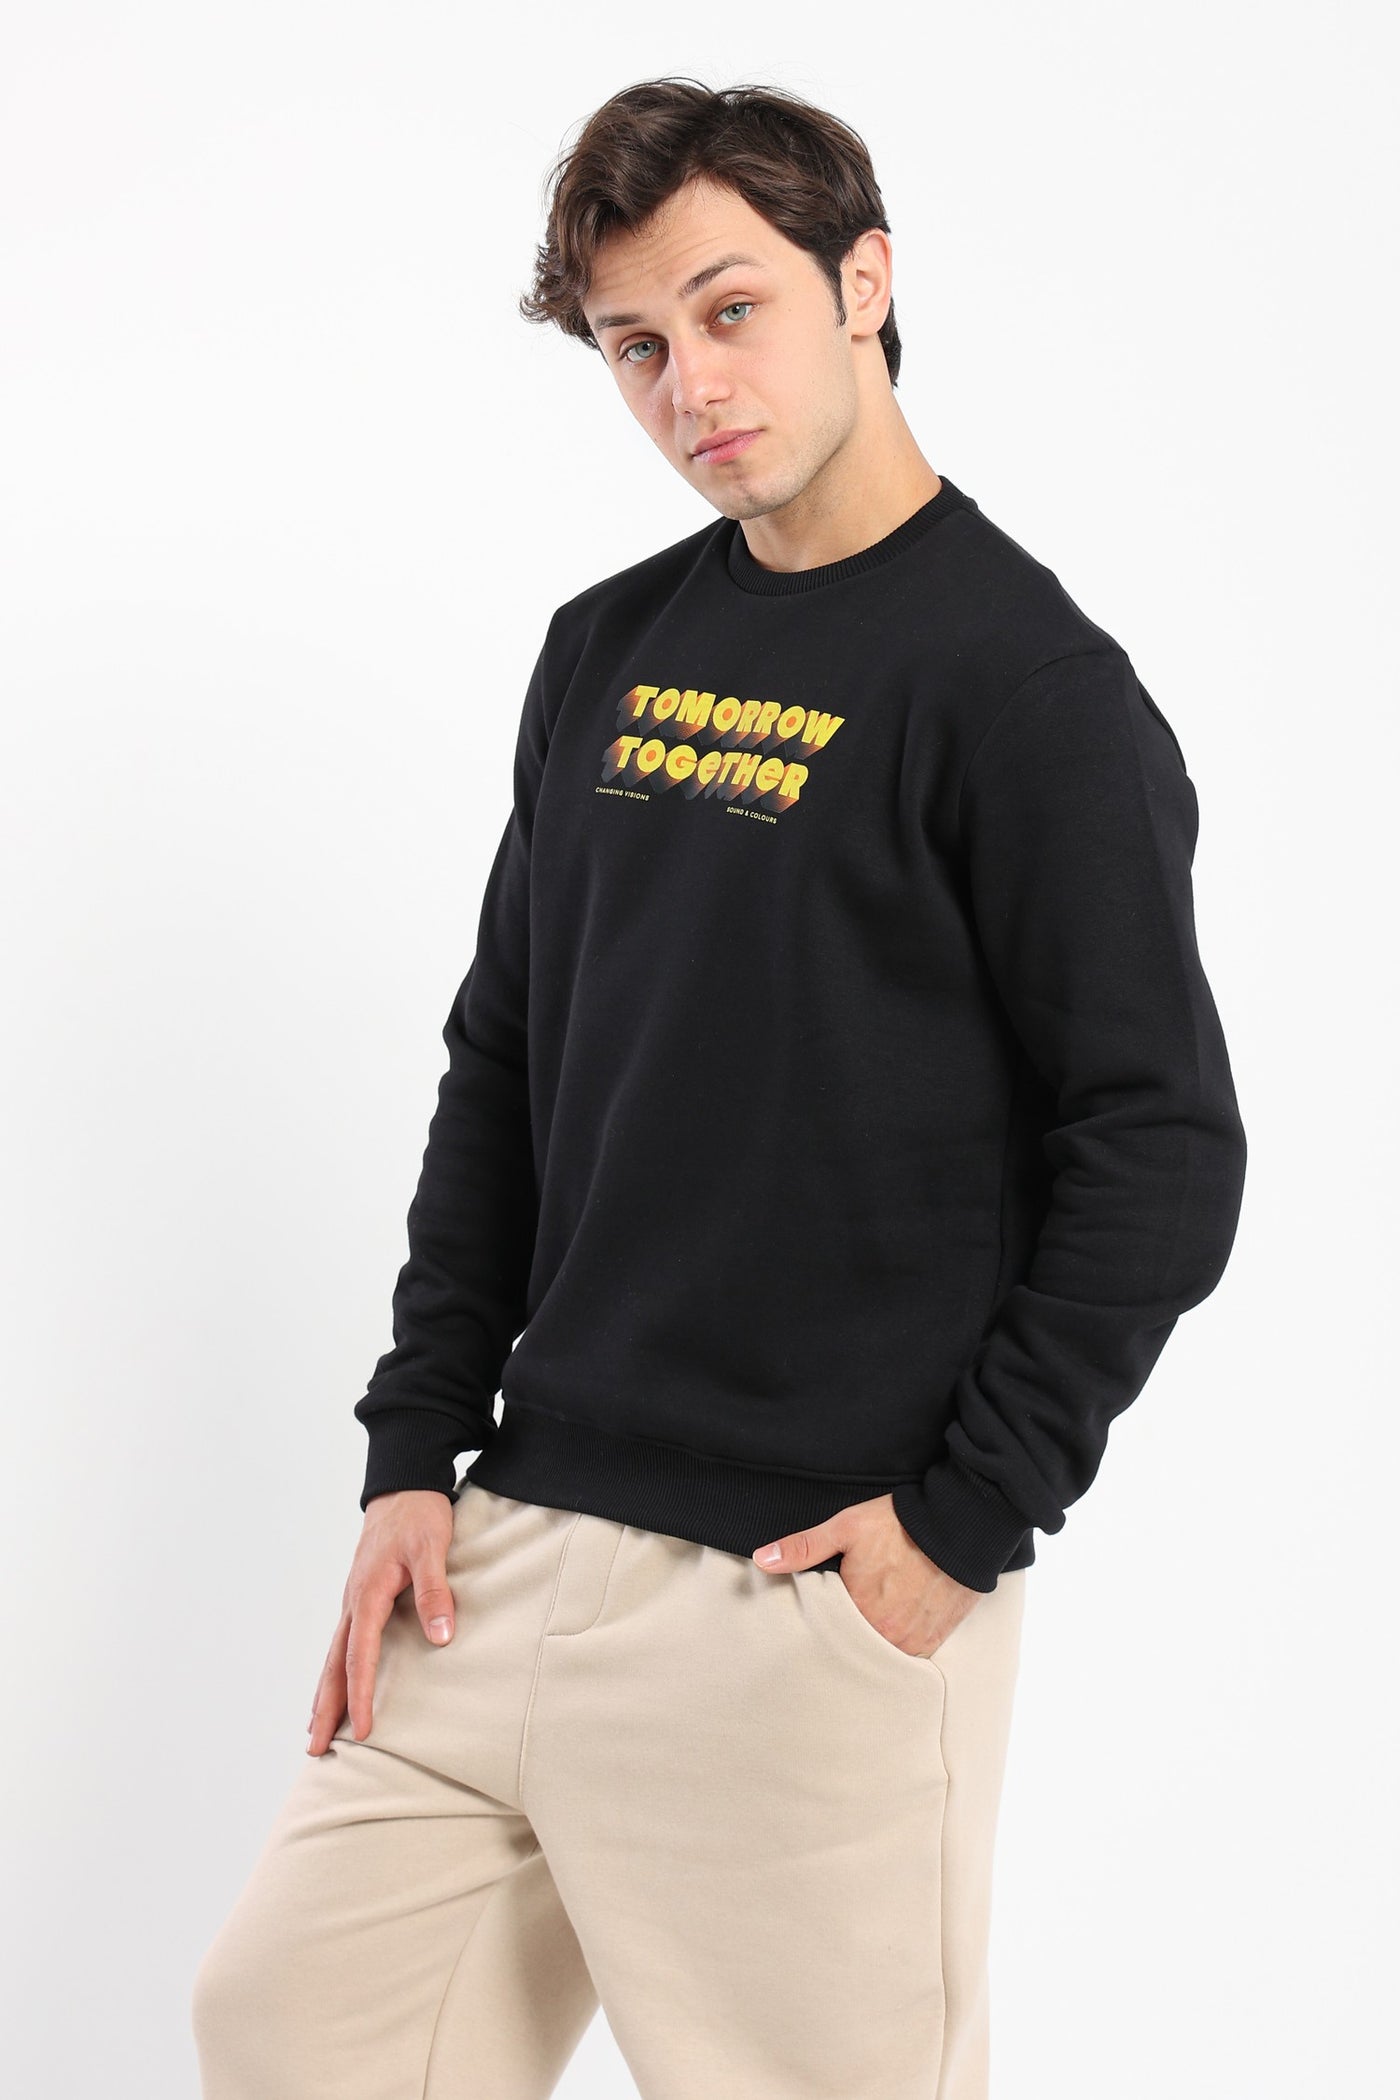 Sweatshirt - "Tomorrow Together" Front Print